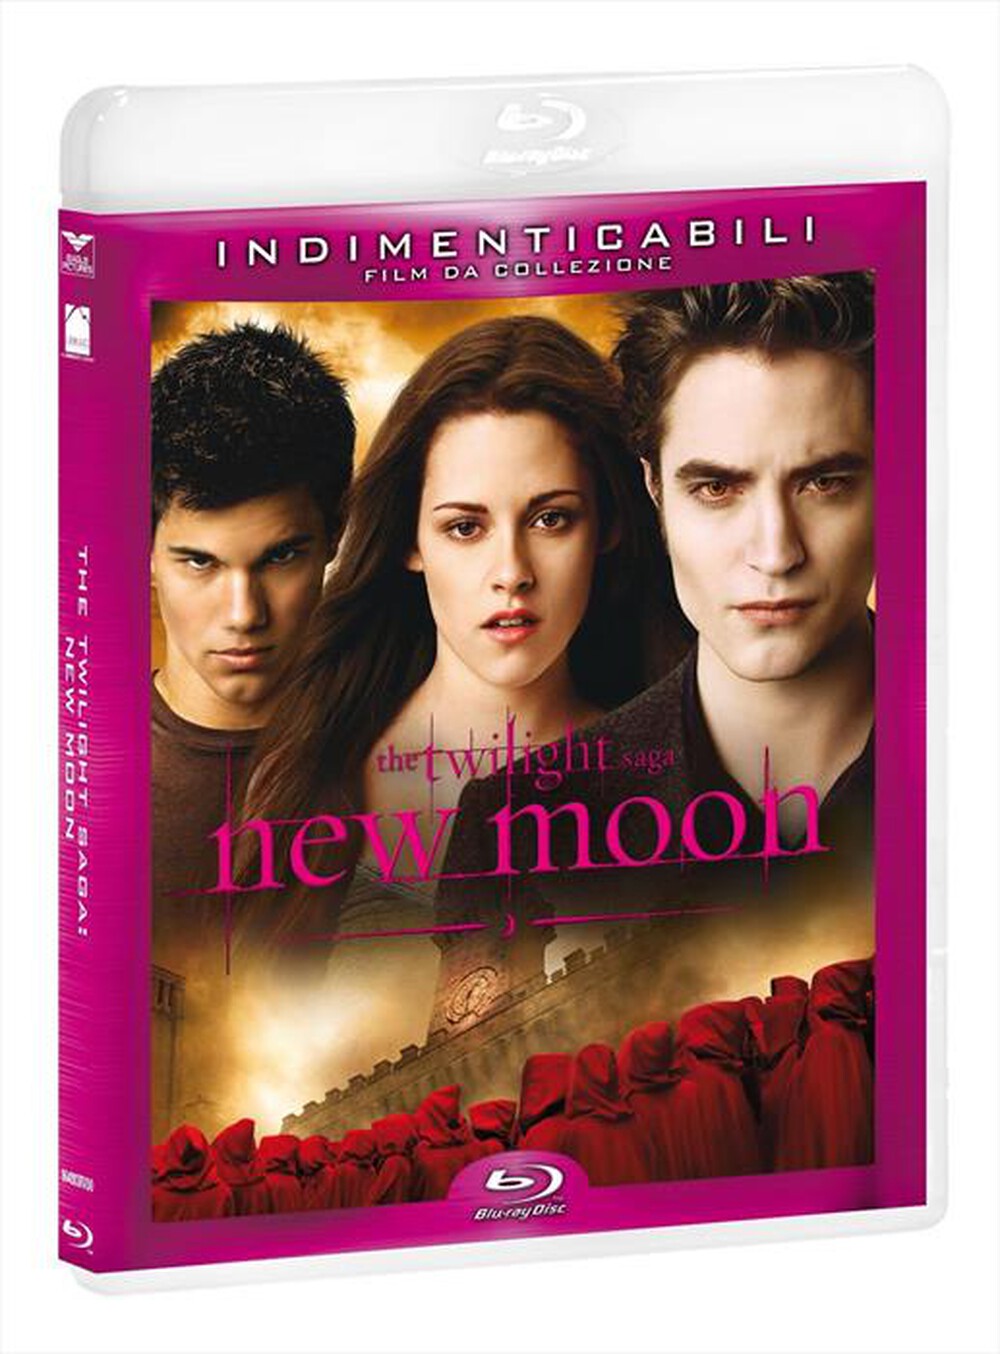 "EAGLE PICTURES - New Moon - The Twilight Saga (Indimenticabili)"